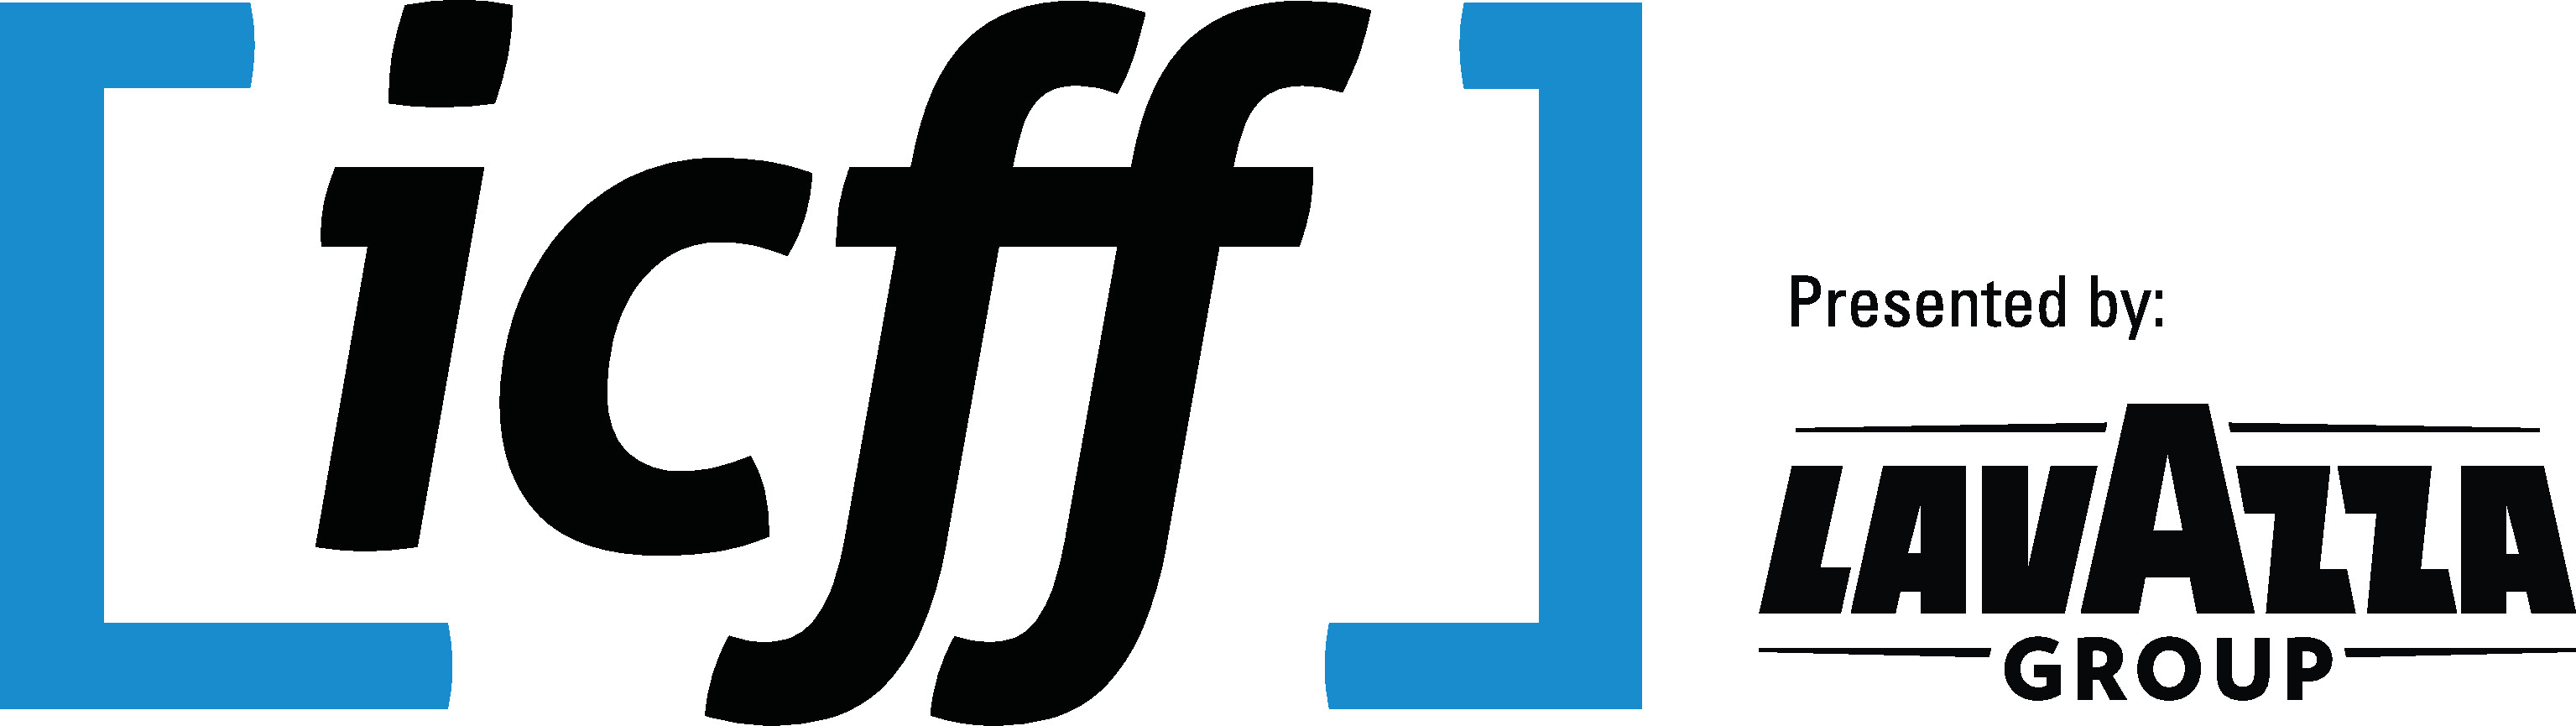 ICFF logo